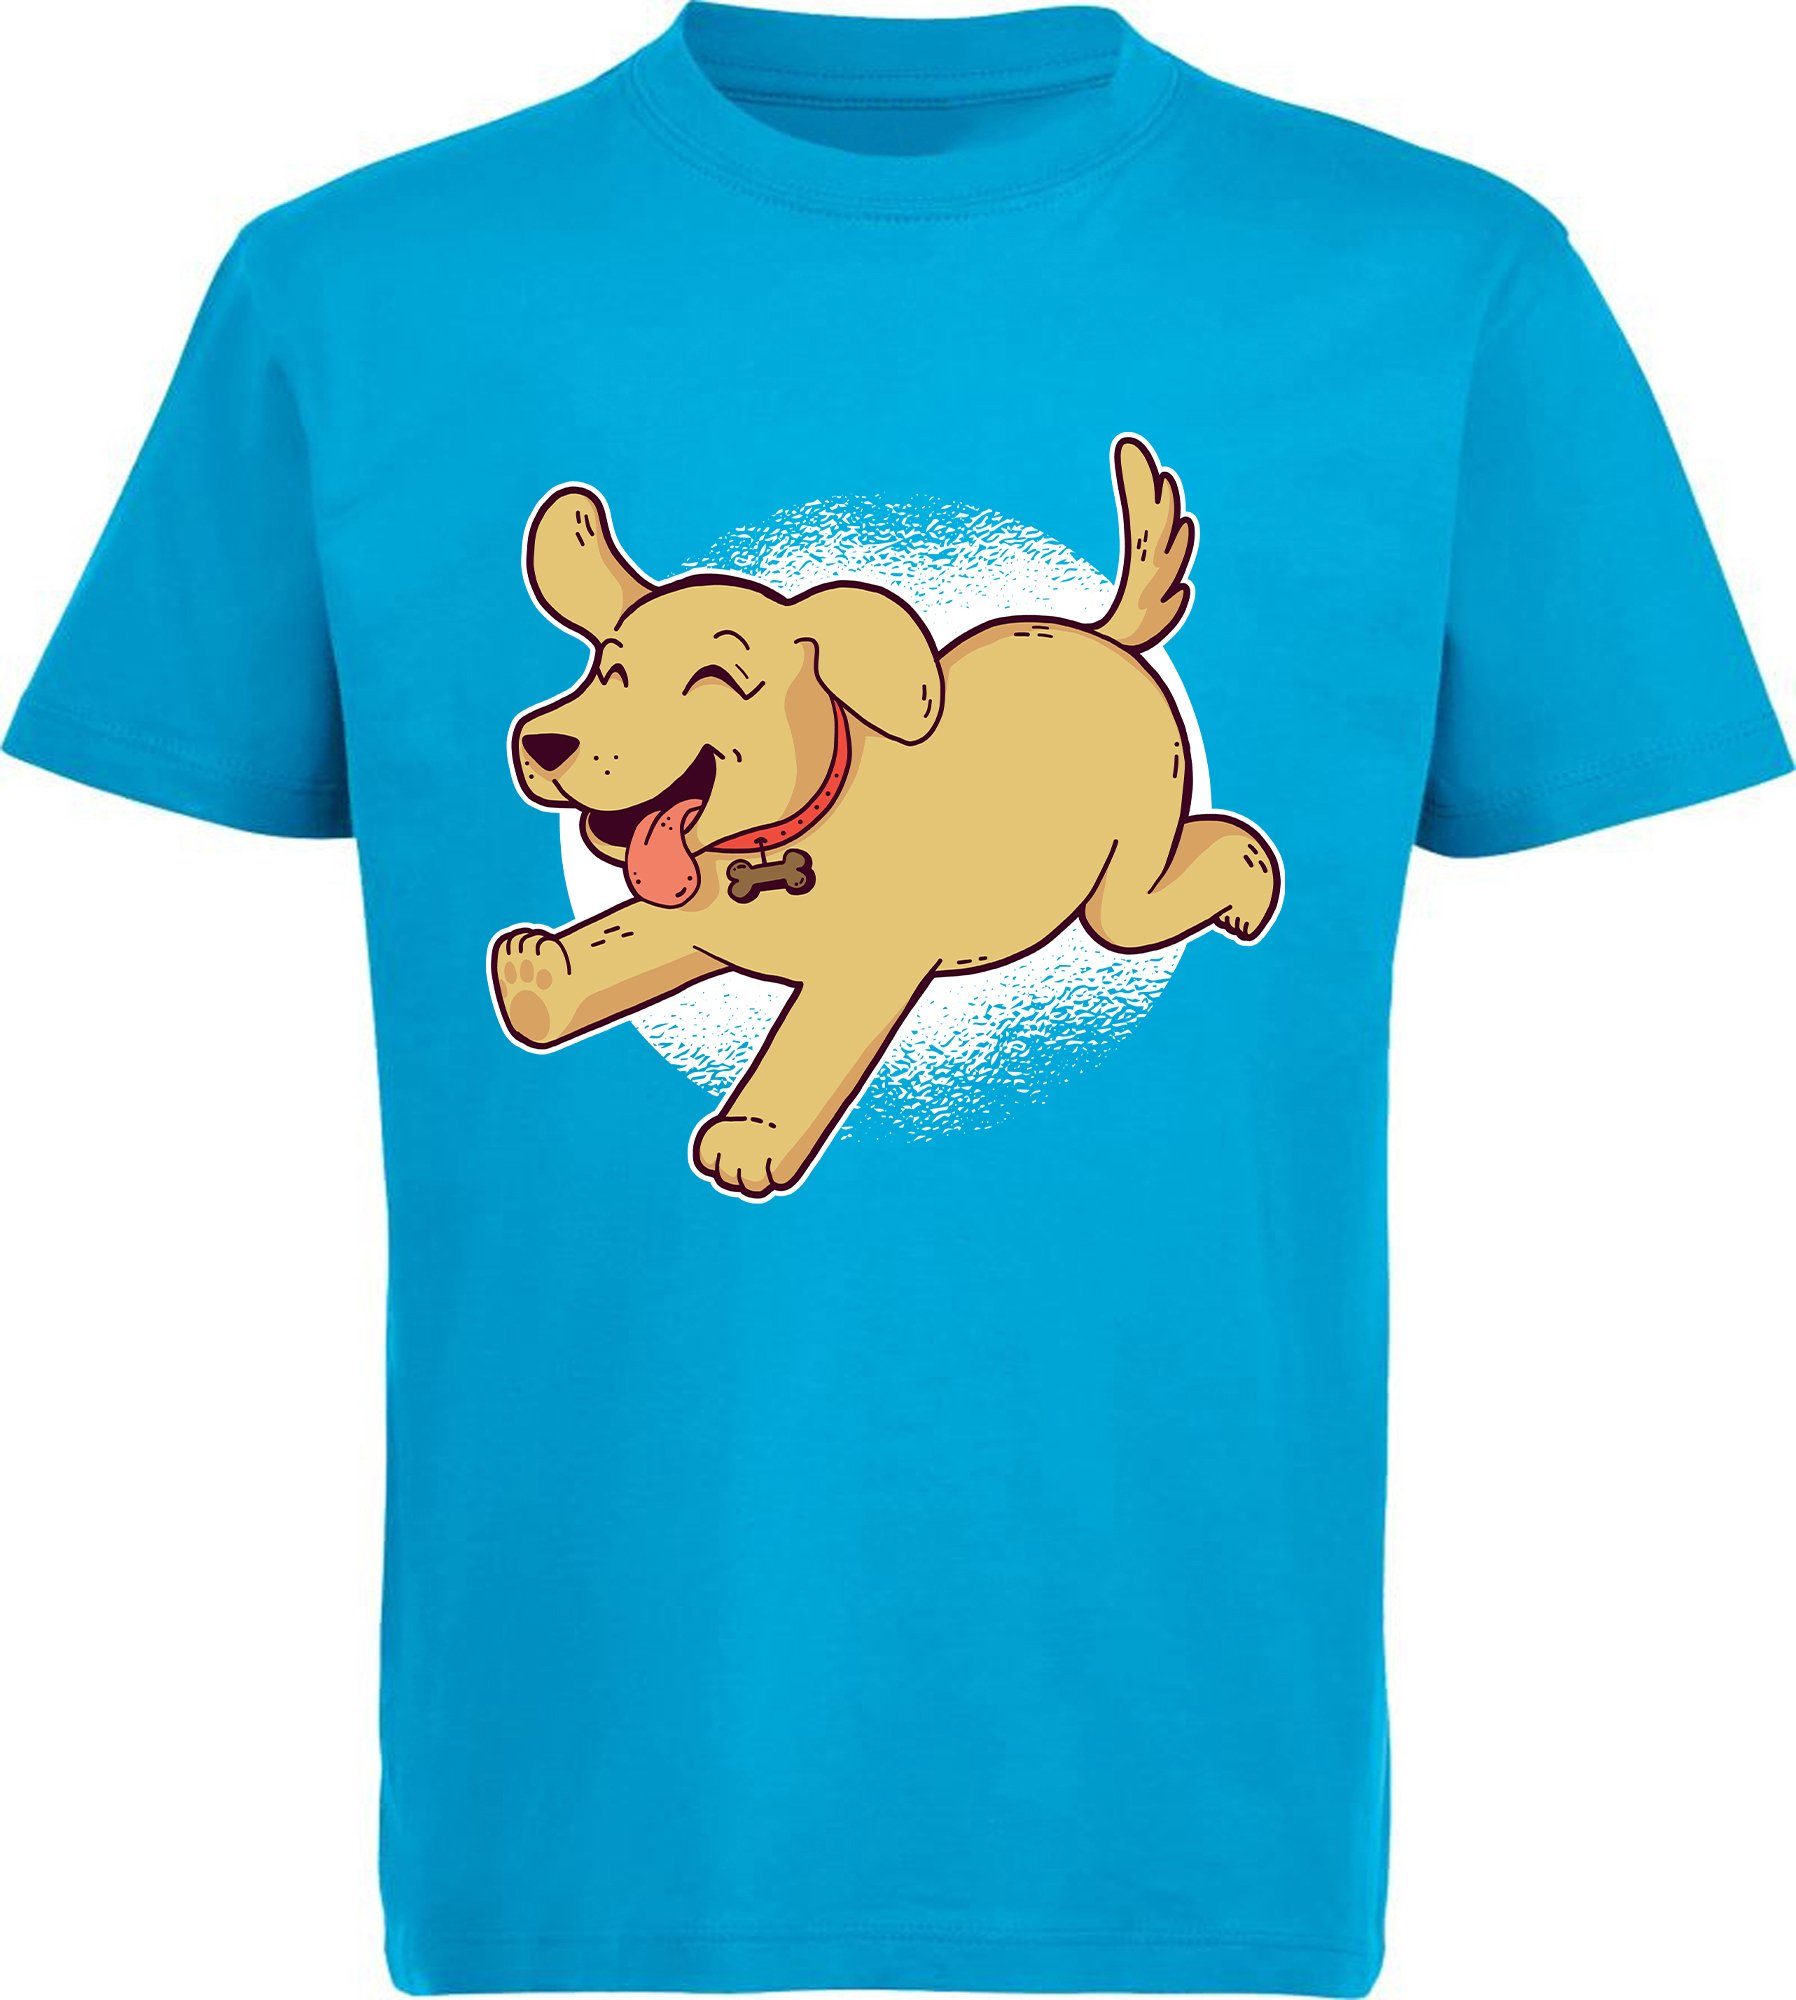 MyDesign24 T-Shirt Kinder Hunde Print Shirt bedruckt - Spielender Labrador Welpe Baumwollshirt mit Aufdruck, i248 aqua blau